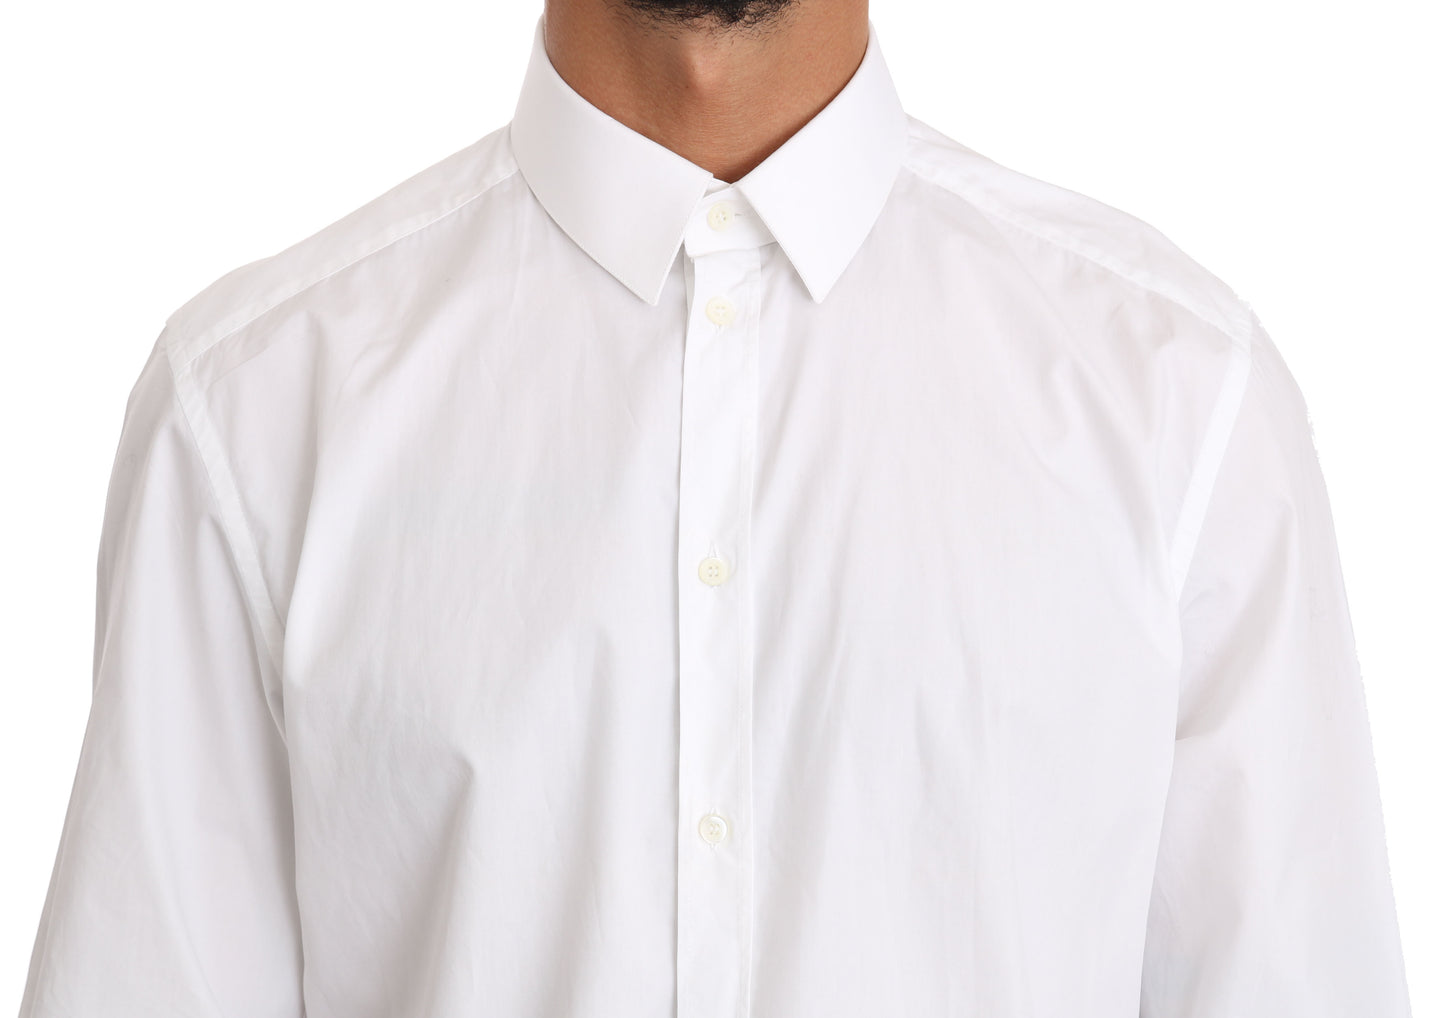 Elegant Slim Fit Dress Shirt in Pure White